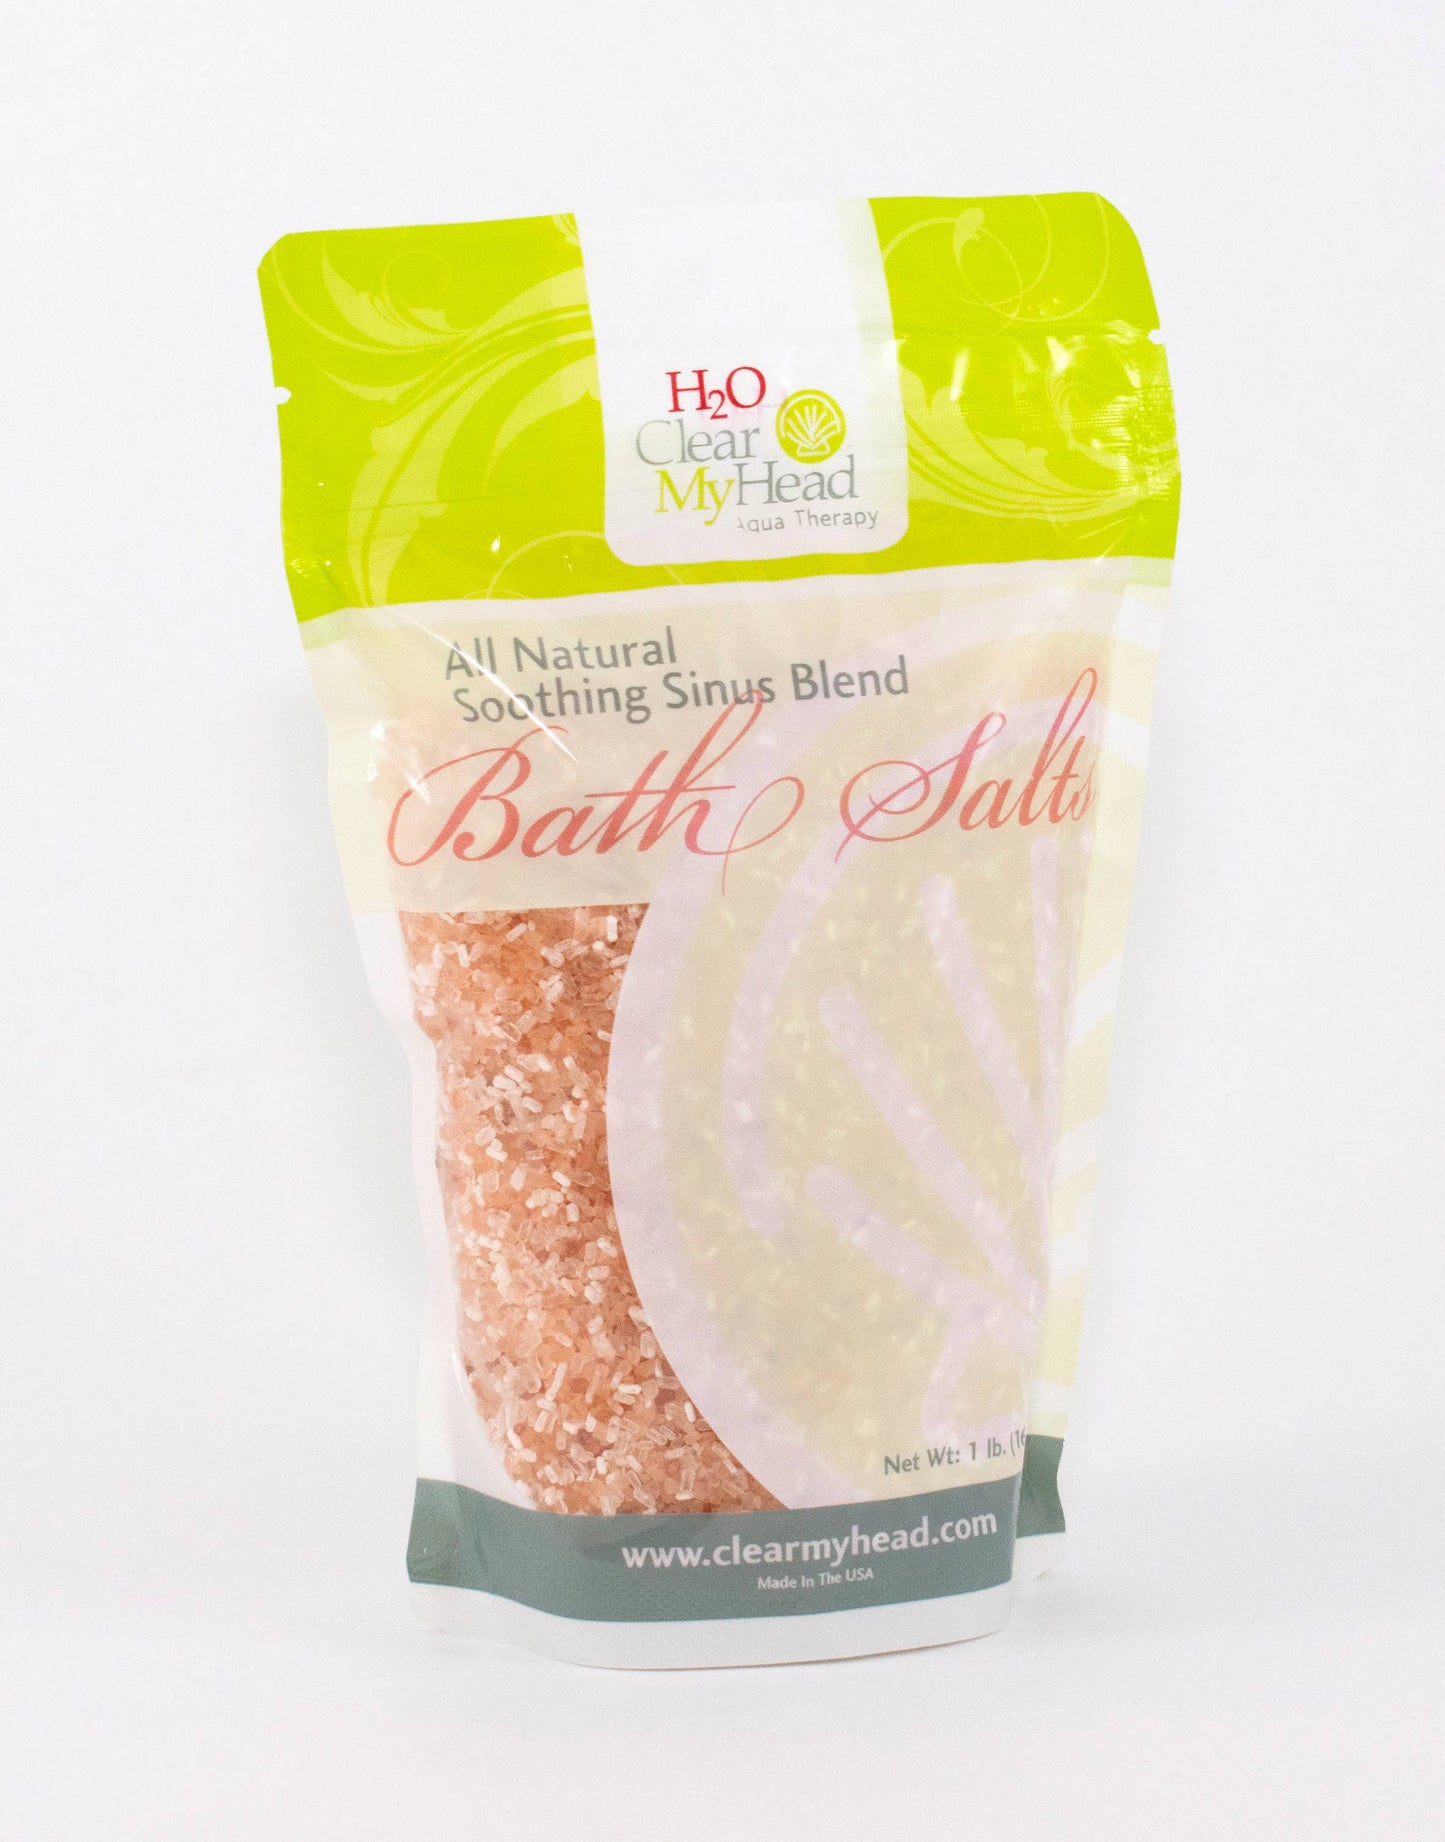 Aqua Therapy 'H2O' Bath Salts In Stand Up Bag Core Clear My Head Ltd